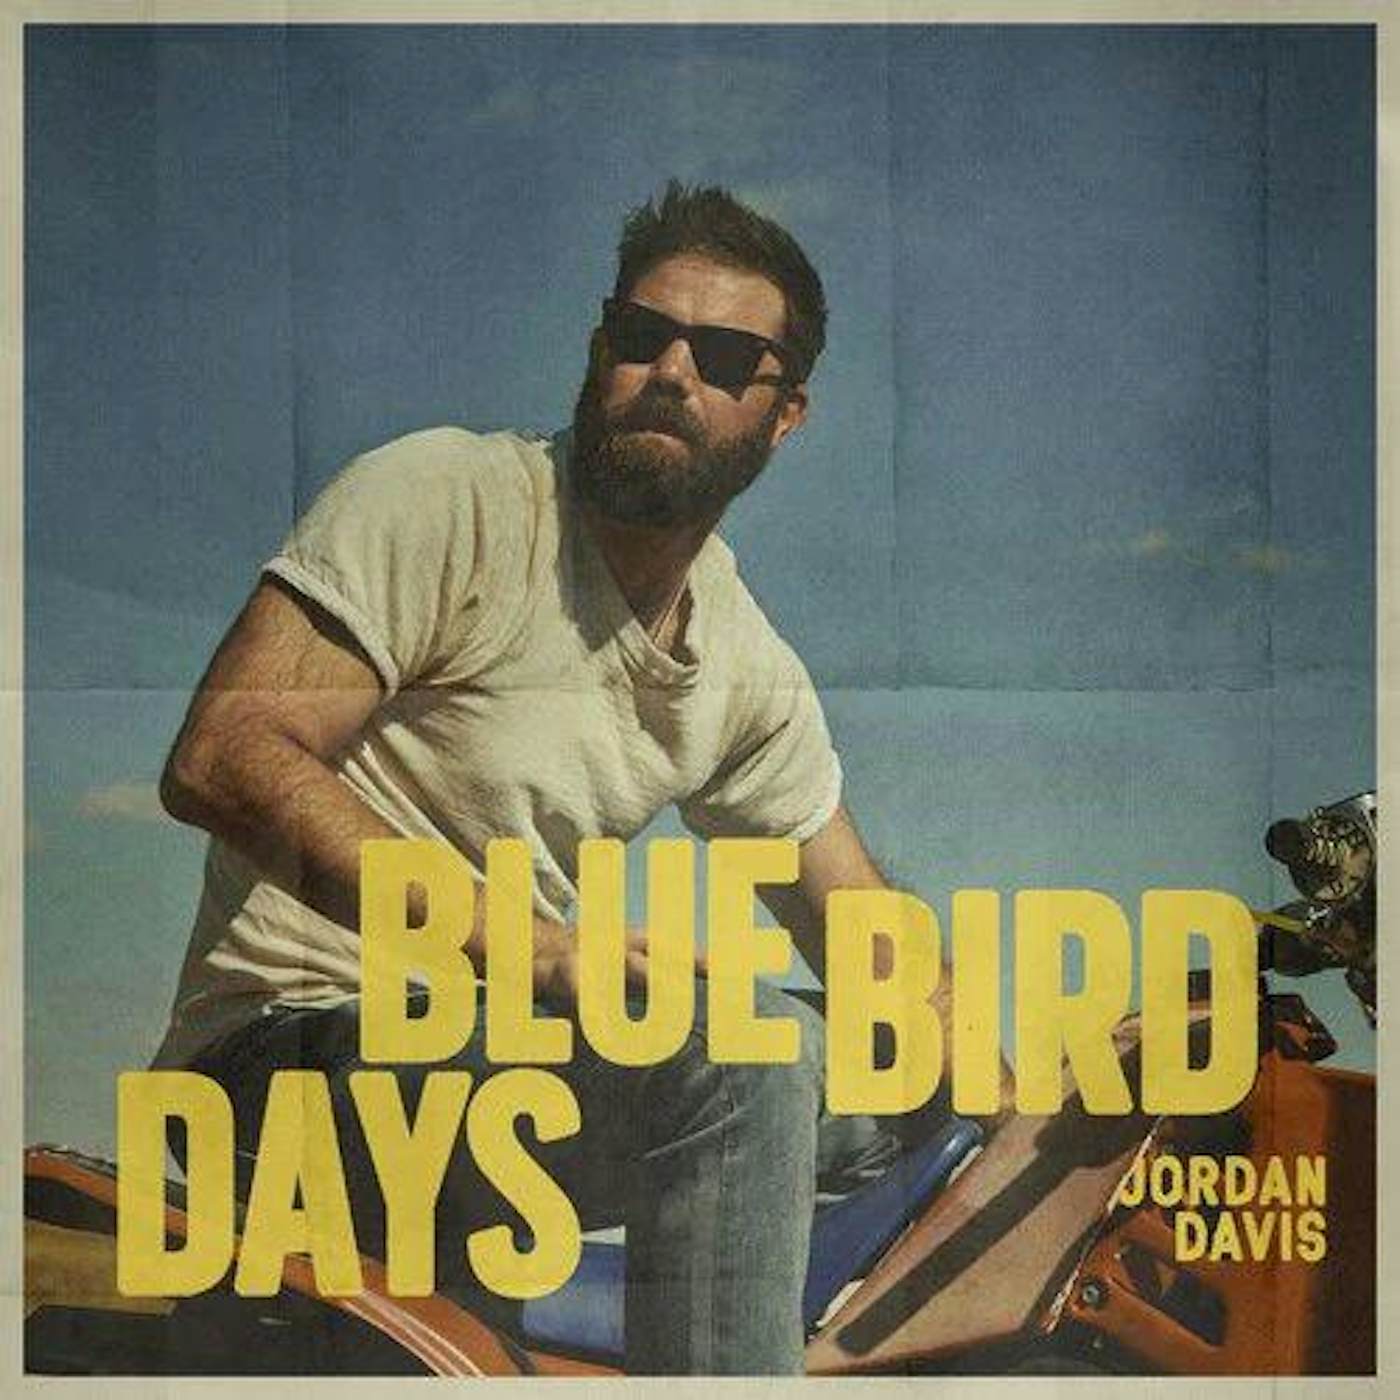 Jordan Davis Bluebird Days (2lp) Vinyl Record